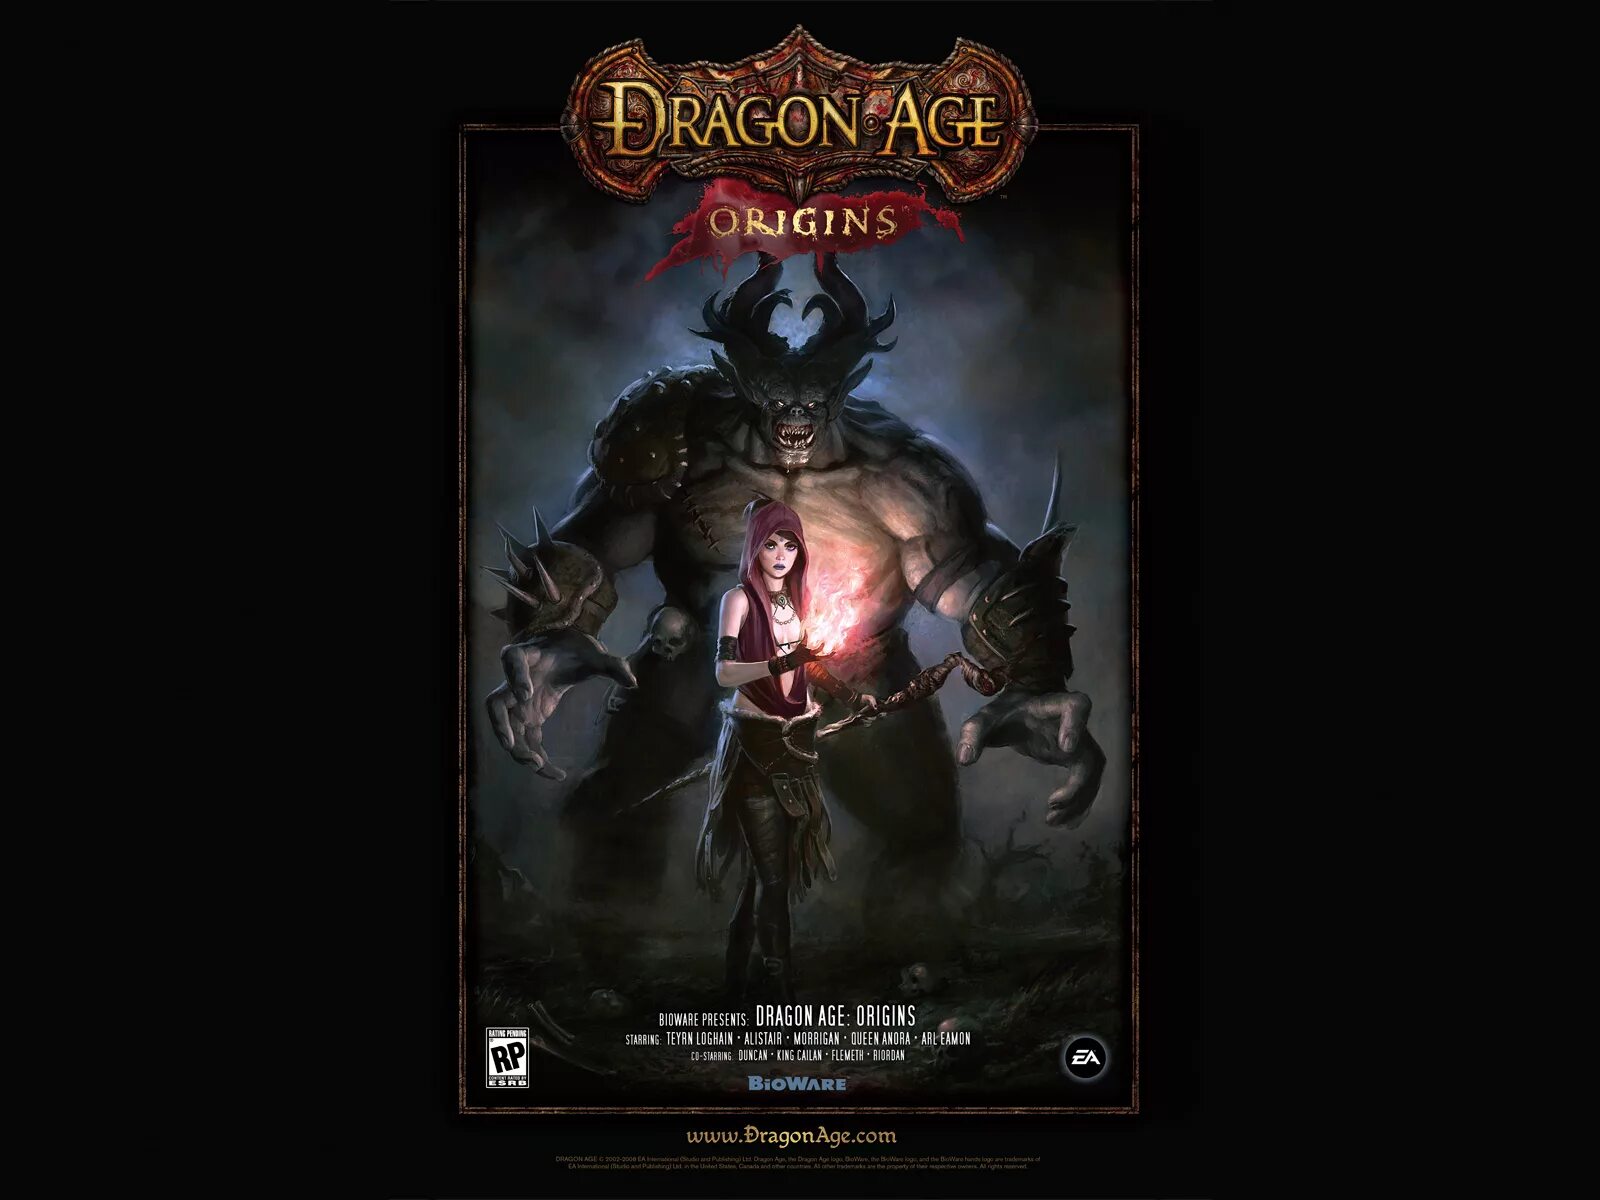 Age of origin войска. Dragon age Origins обои 1600 900. Вкфпщт ФПУ щкшпшты обои. Dragon age Origins HD обои. Dragon age Origins обои 1920 1080.